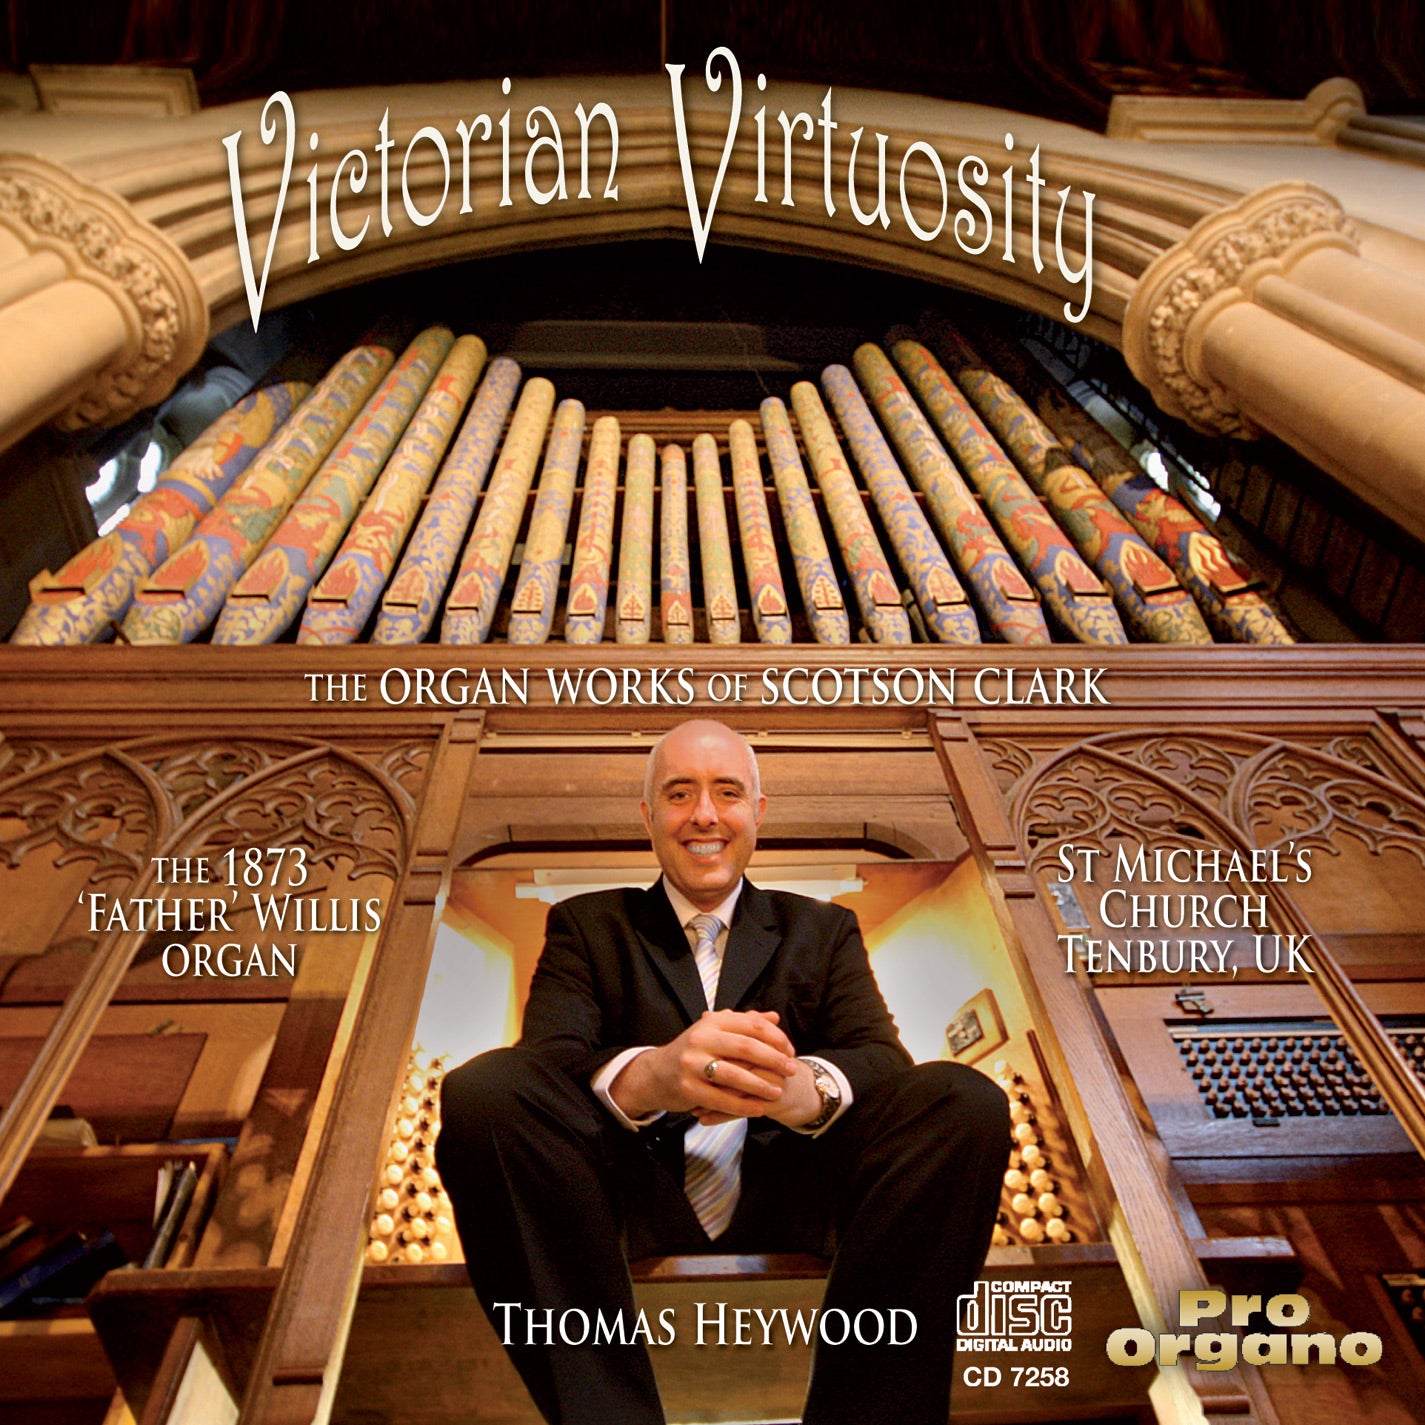 Victorian Virtuosity (CD) - Concert Organ International